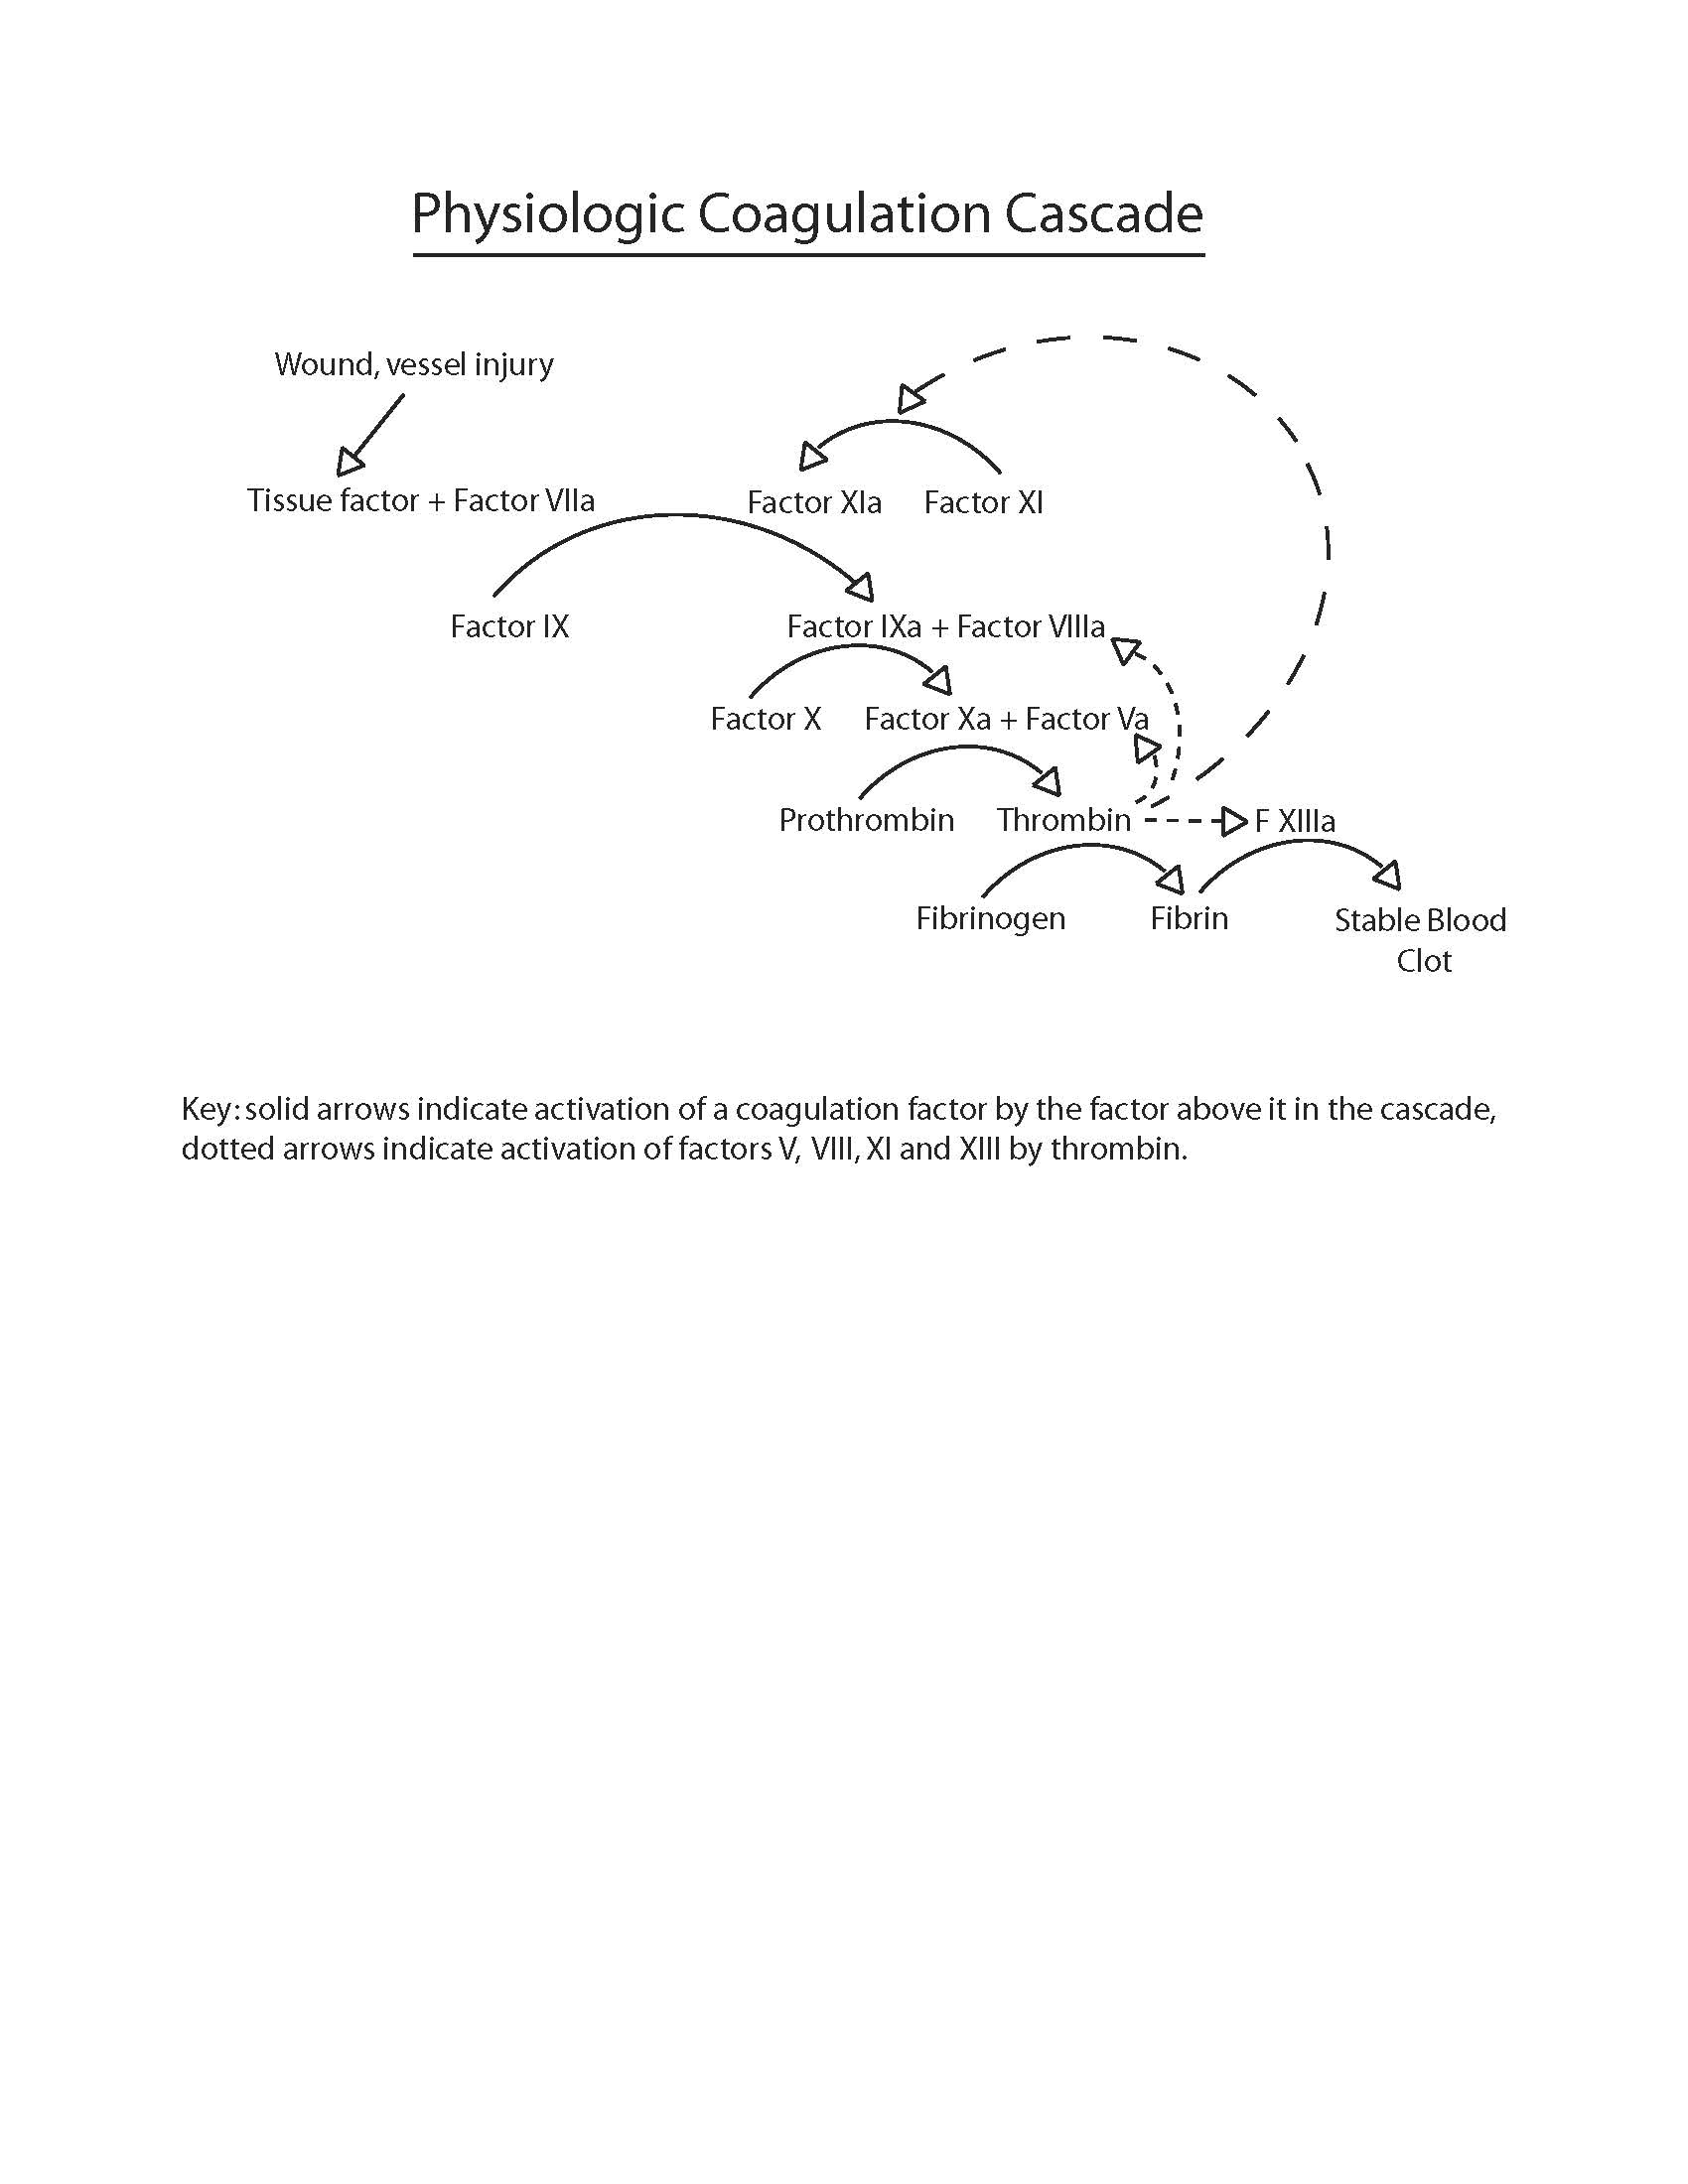 Diagram of the physiologic coagulation cascade